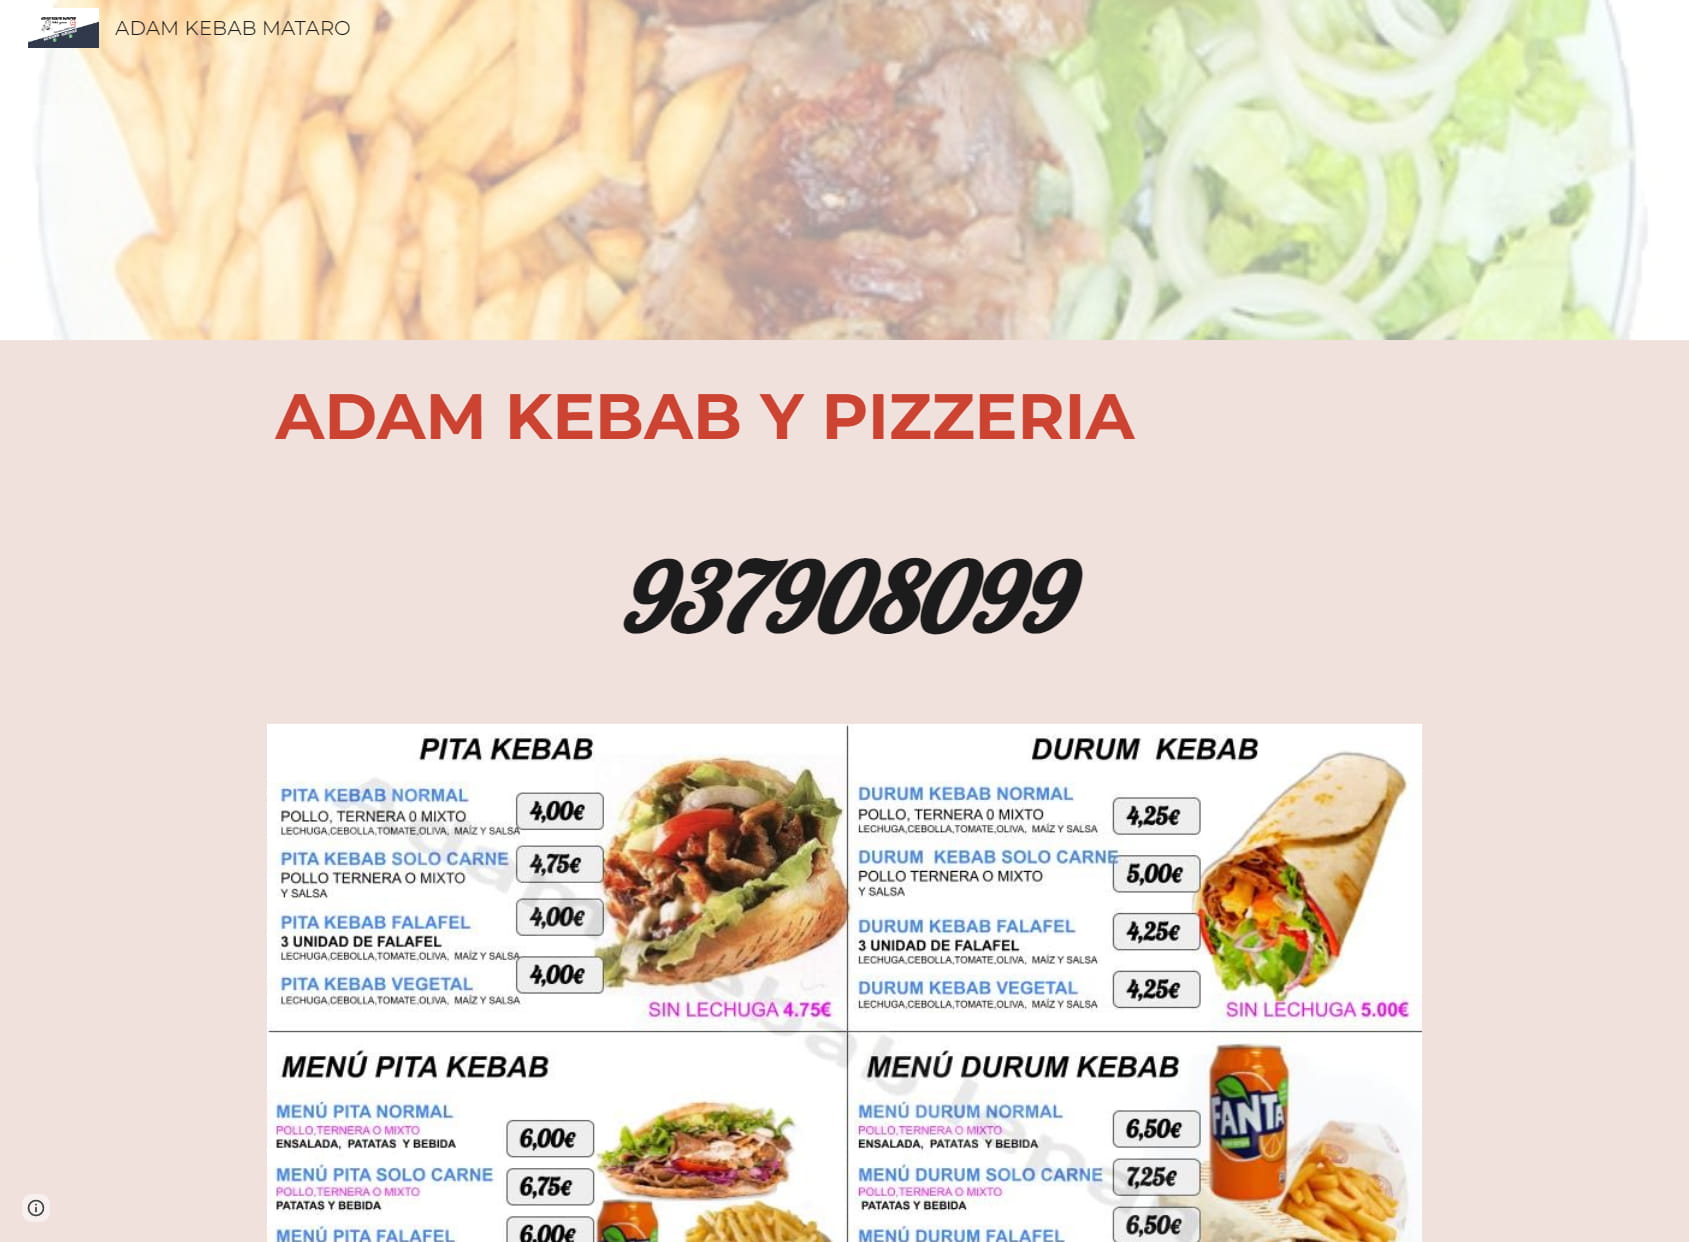 ADAM Kebab y Pizzeria mataro